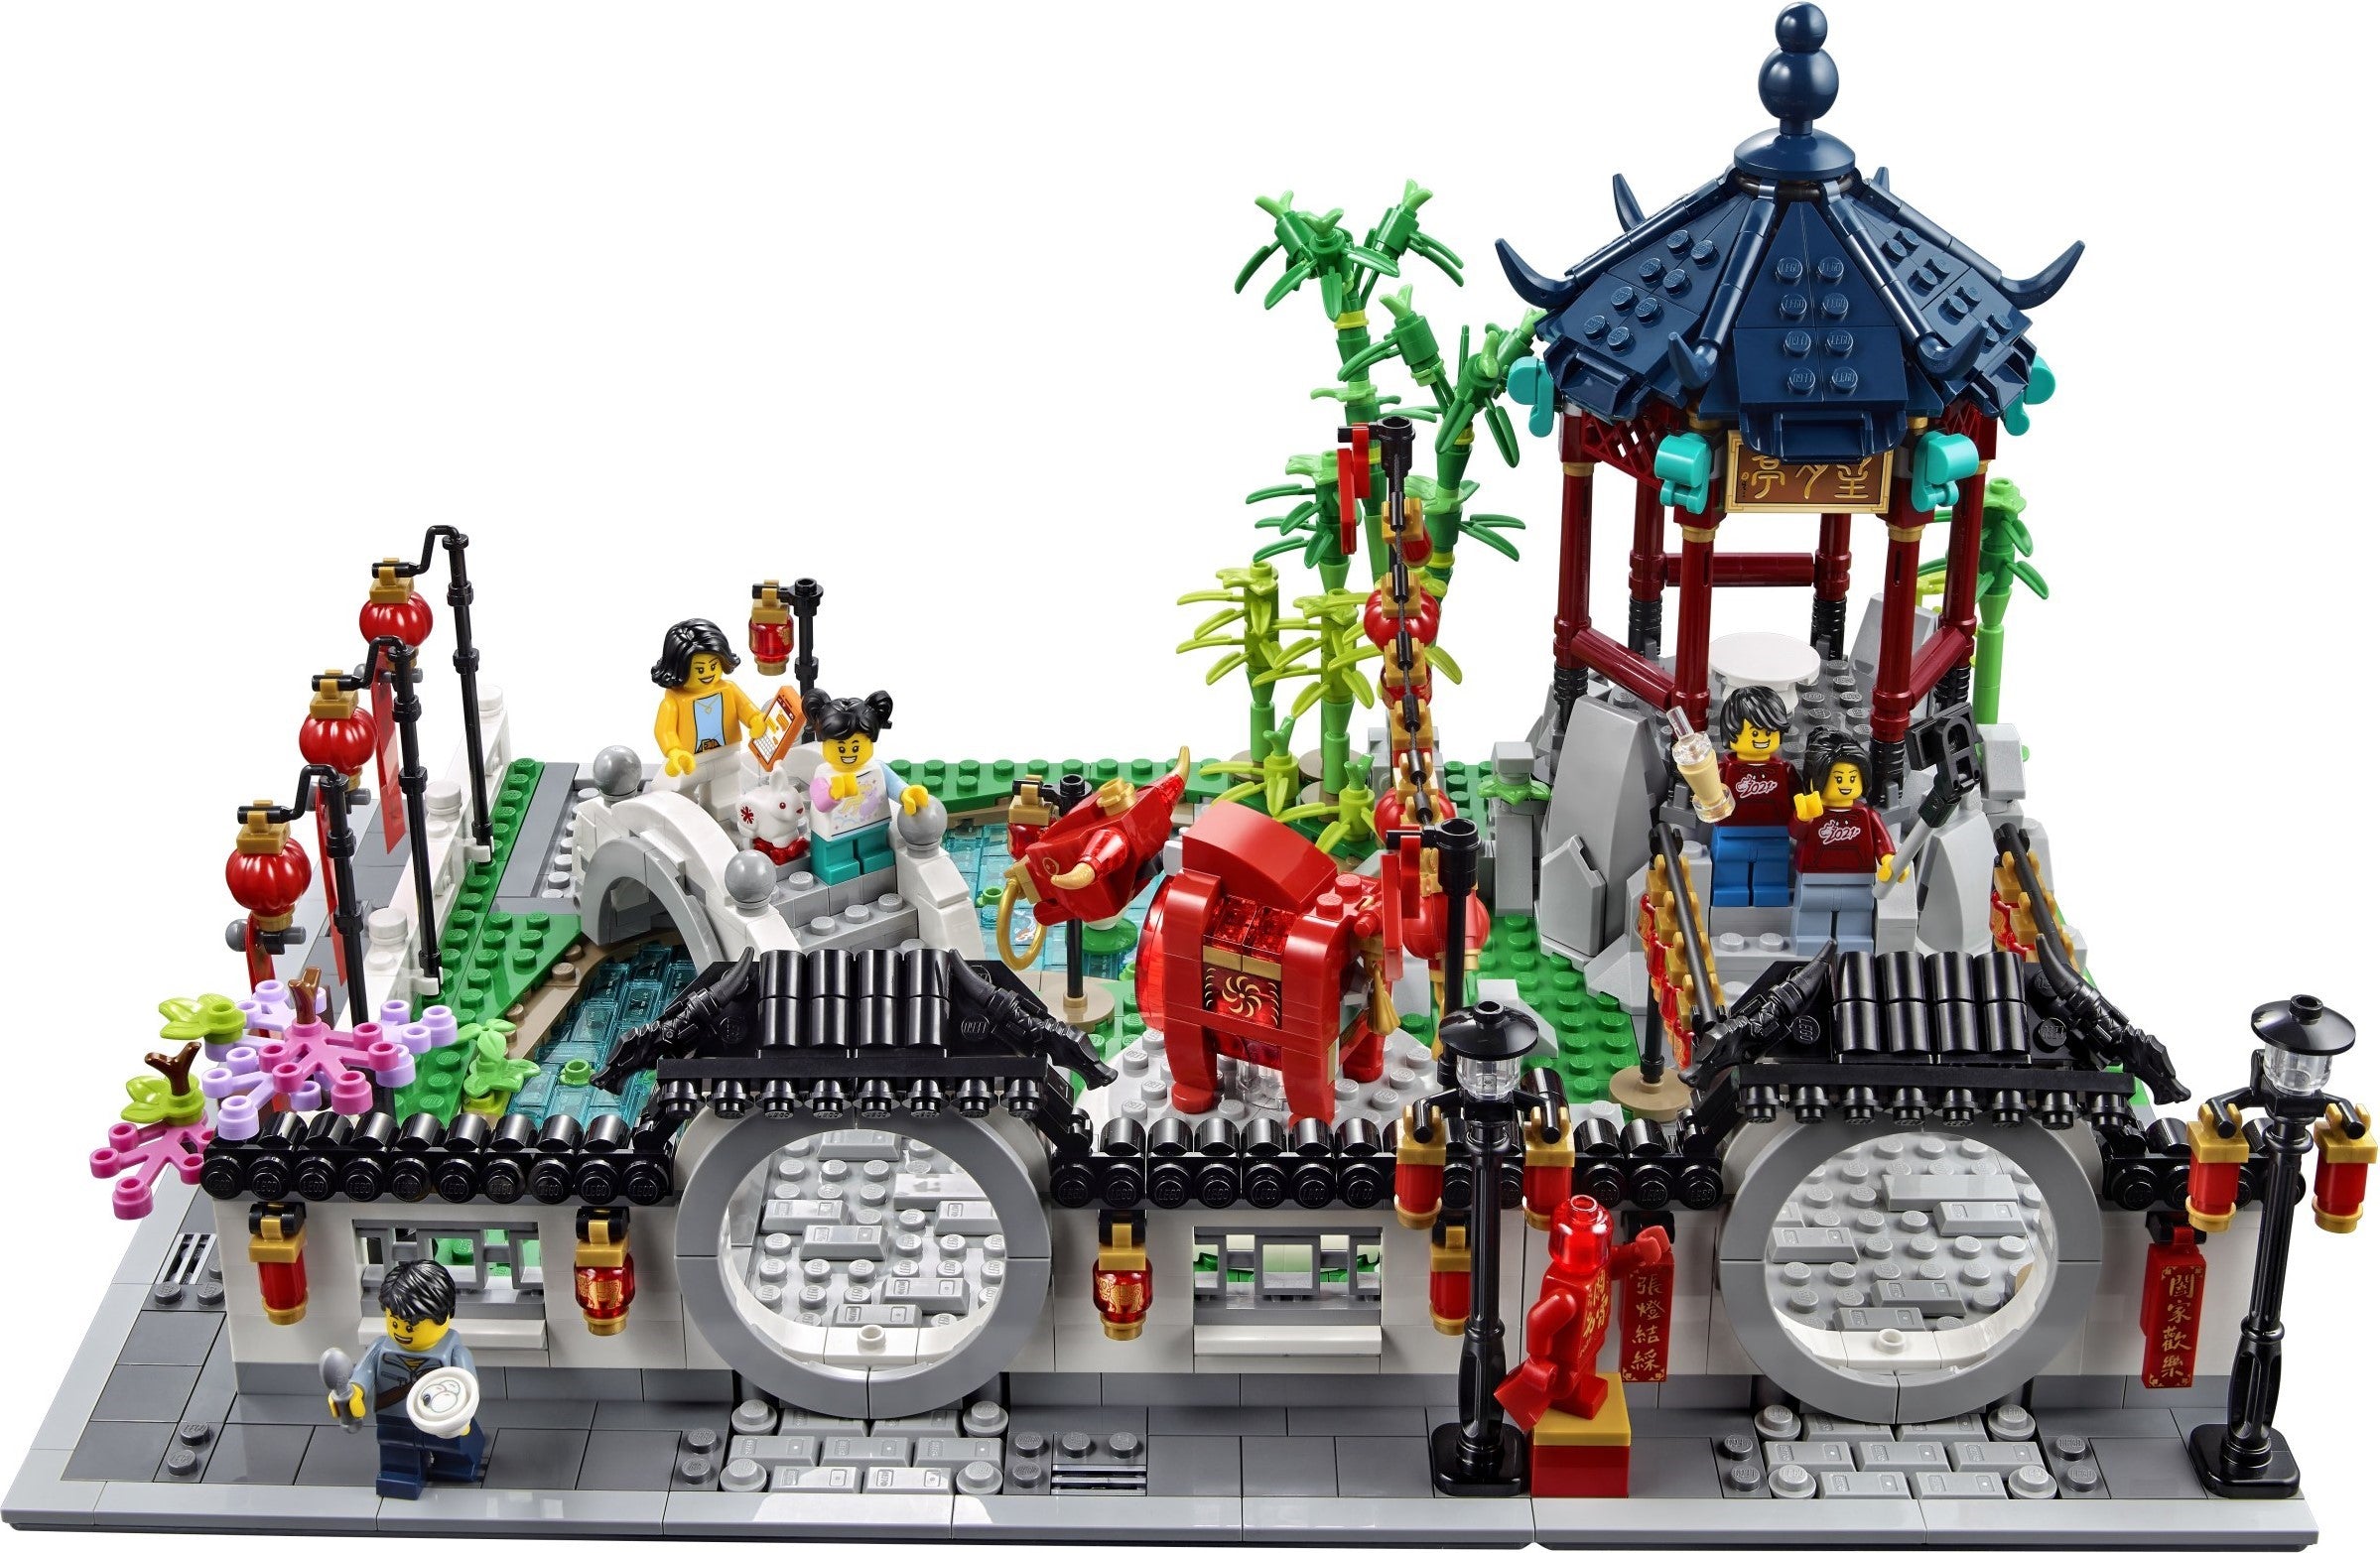 LEGO 80107 Spring Lantern Festival